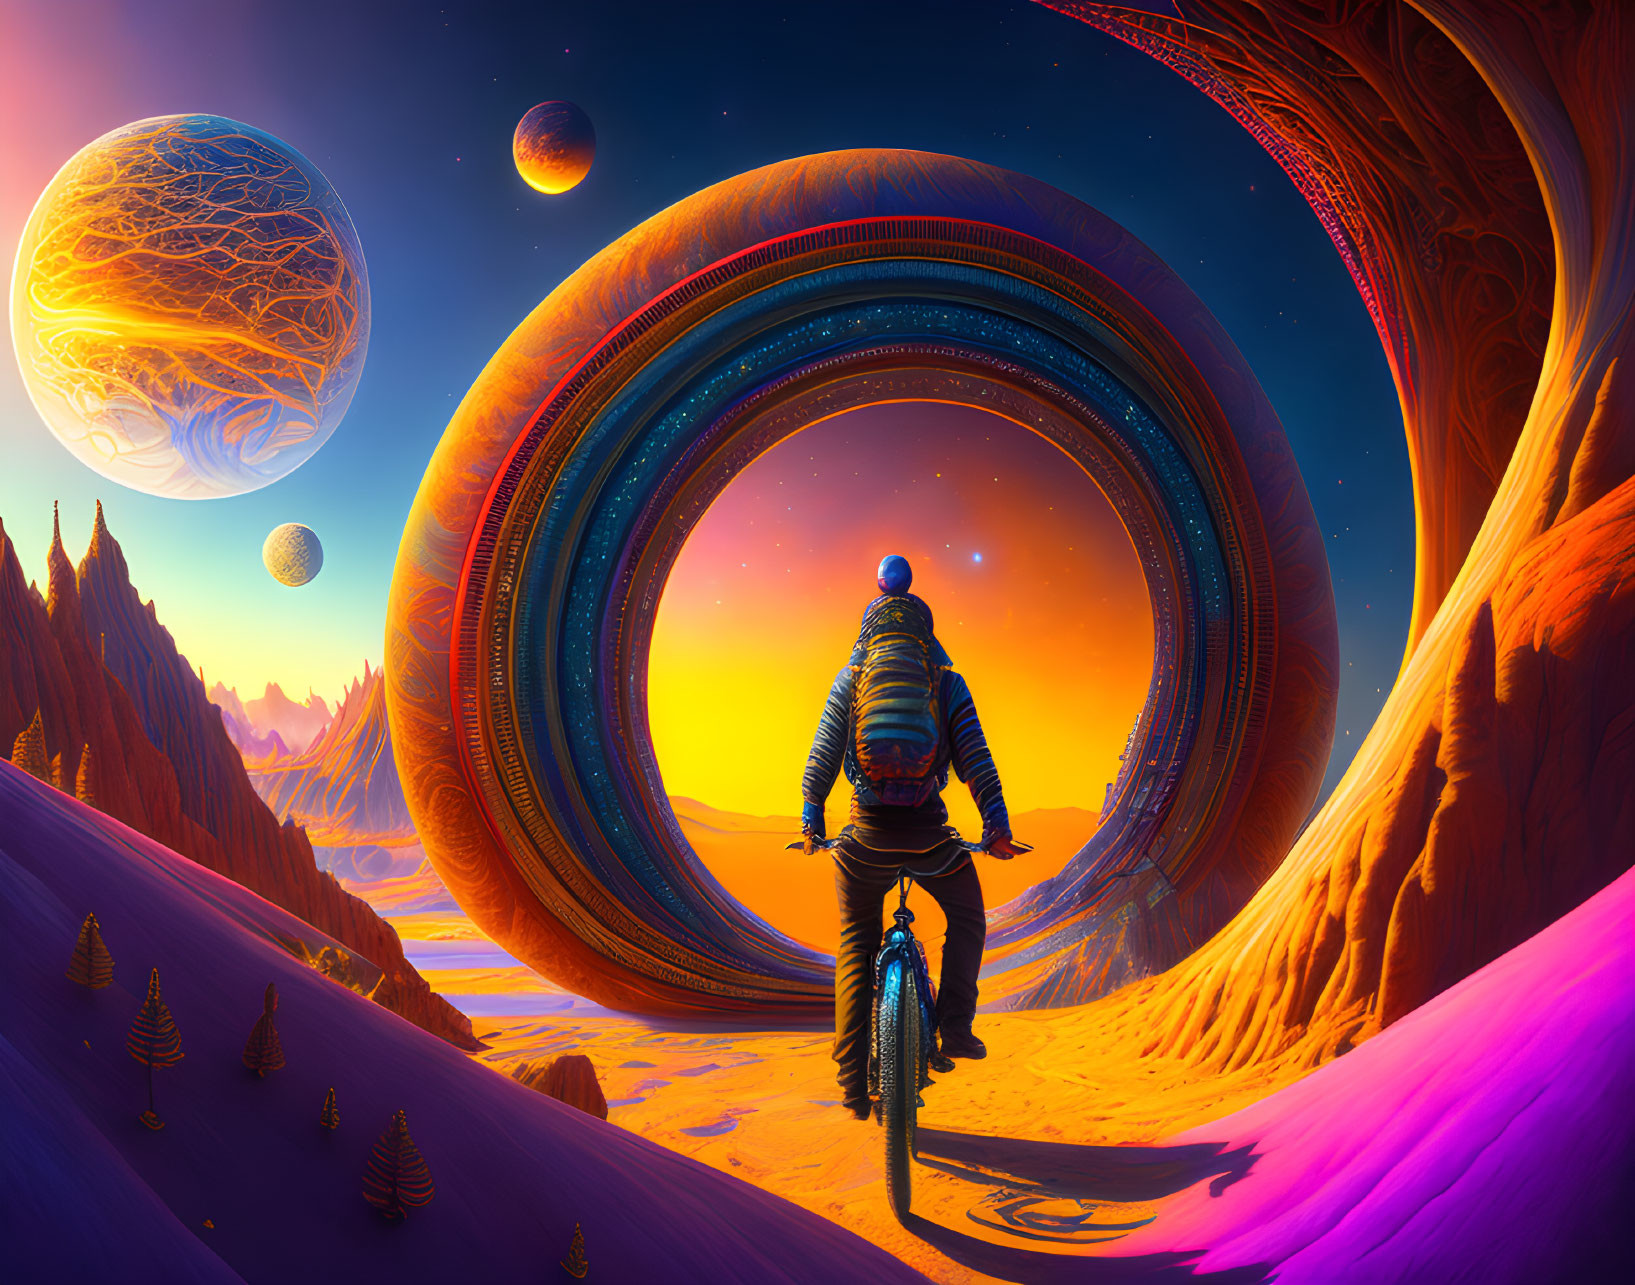 Cyclist in front of swirling portal on vibrant alien landscape